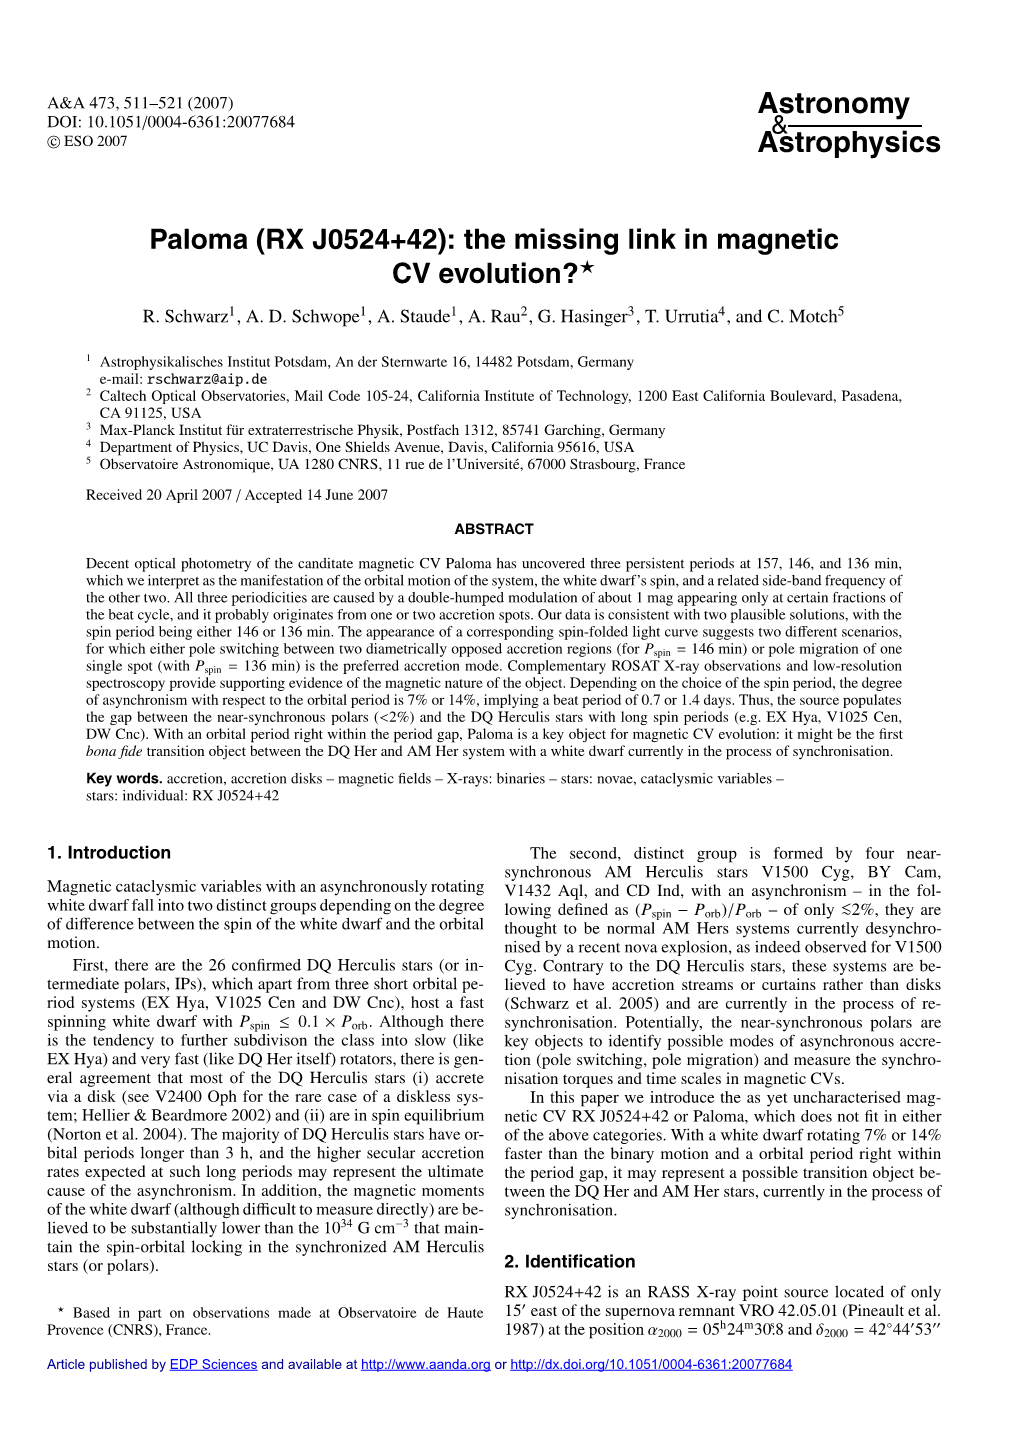 Paloma (RX J0524+42): the Missing Link in Magnetic CV Evolution?